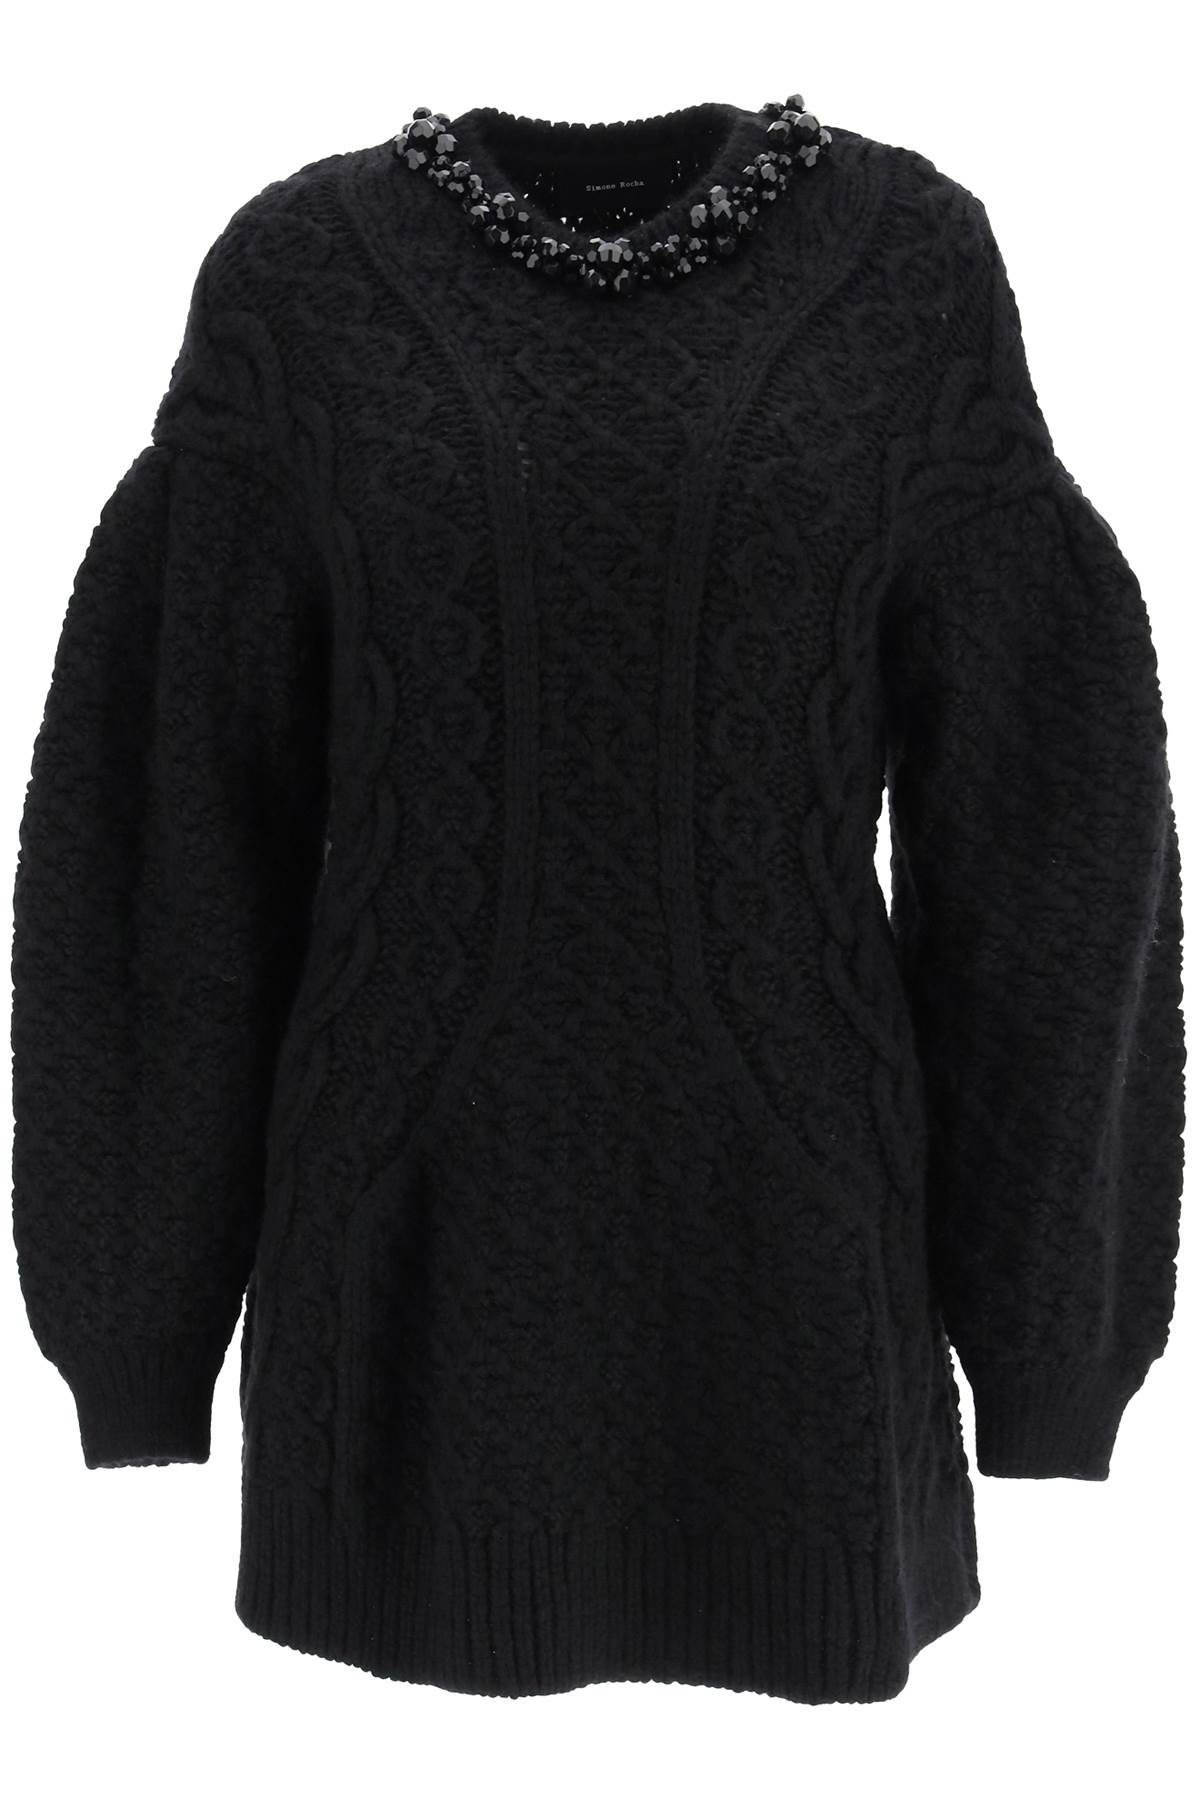 Simone Rocha Cable-knit Sweater